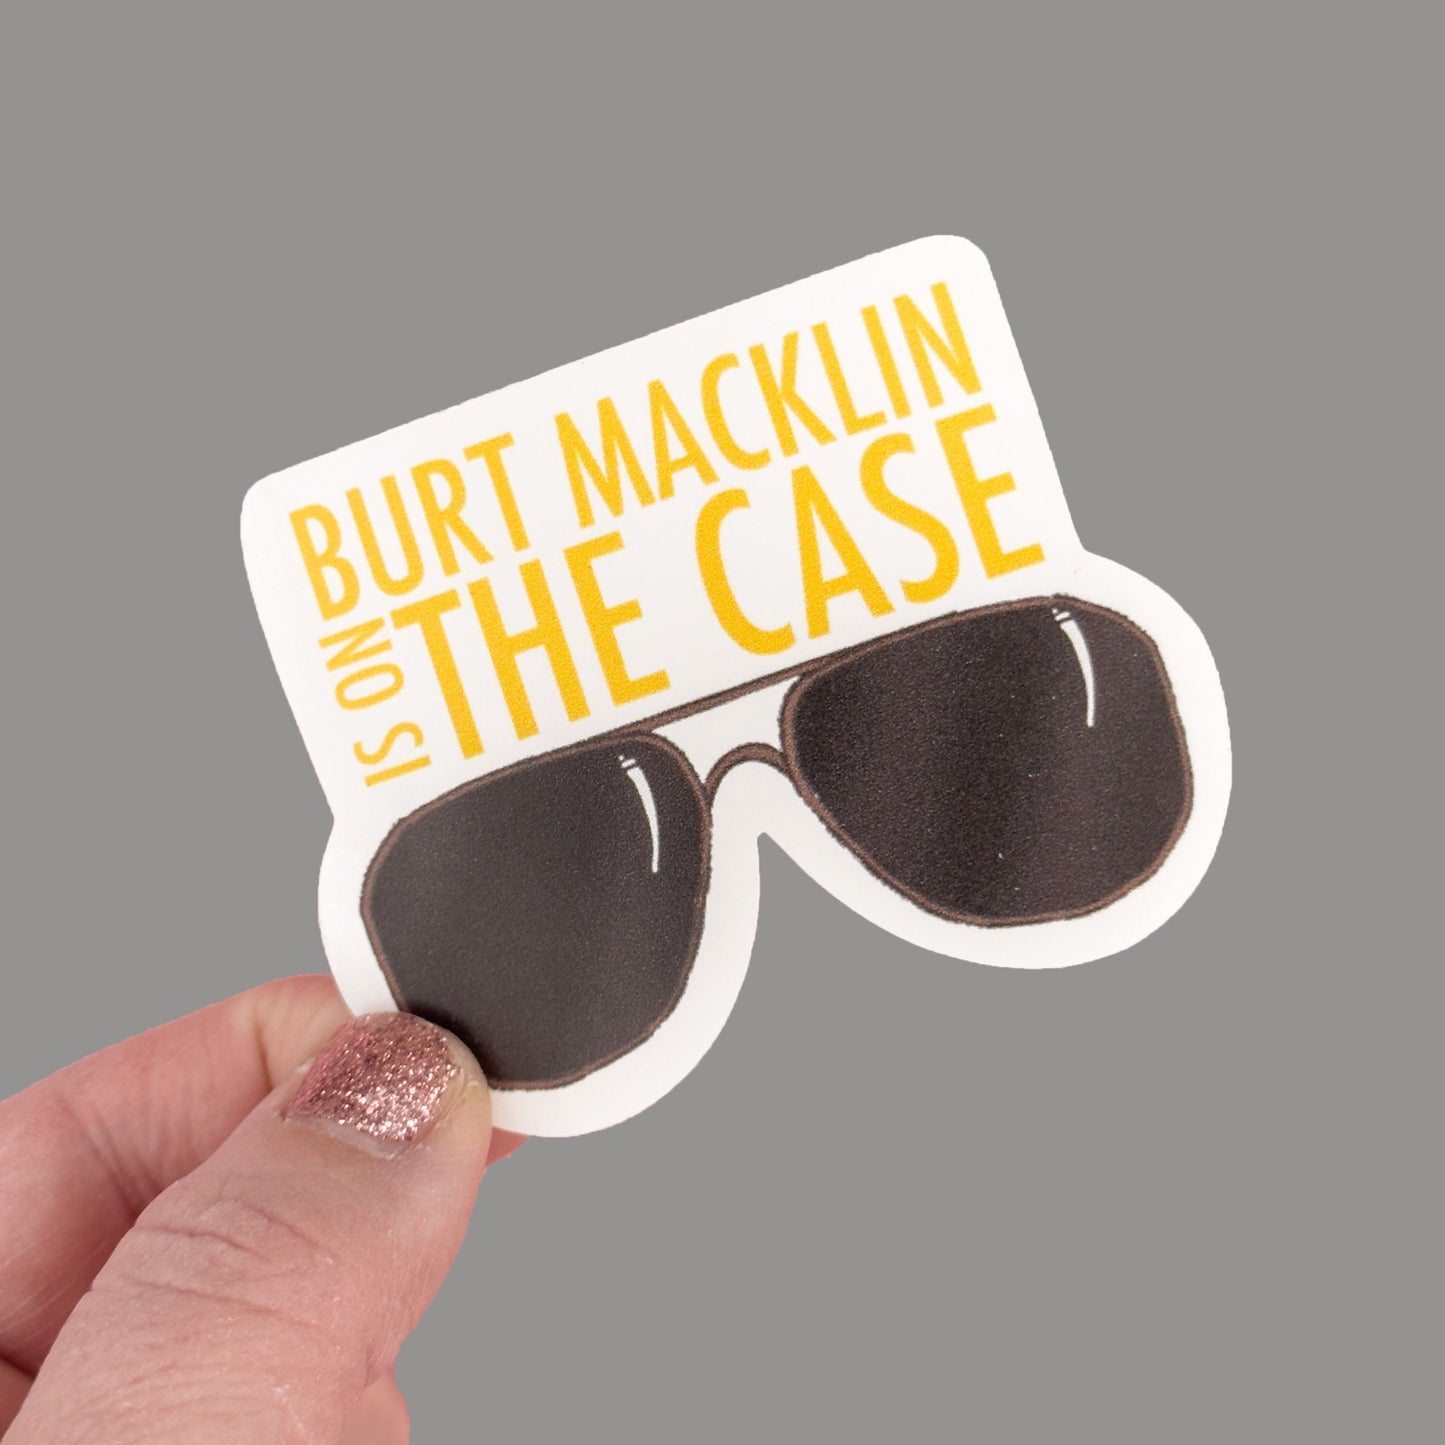 Z@ Hales Yeah Design Burt Macklin is on The Case Sticker ~3" at Longest Edge